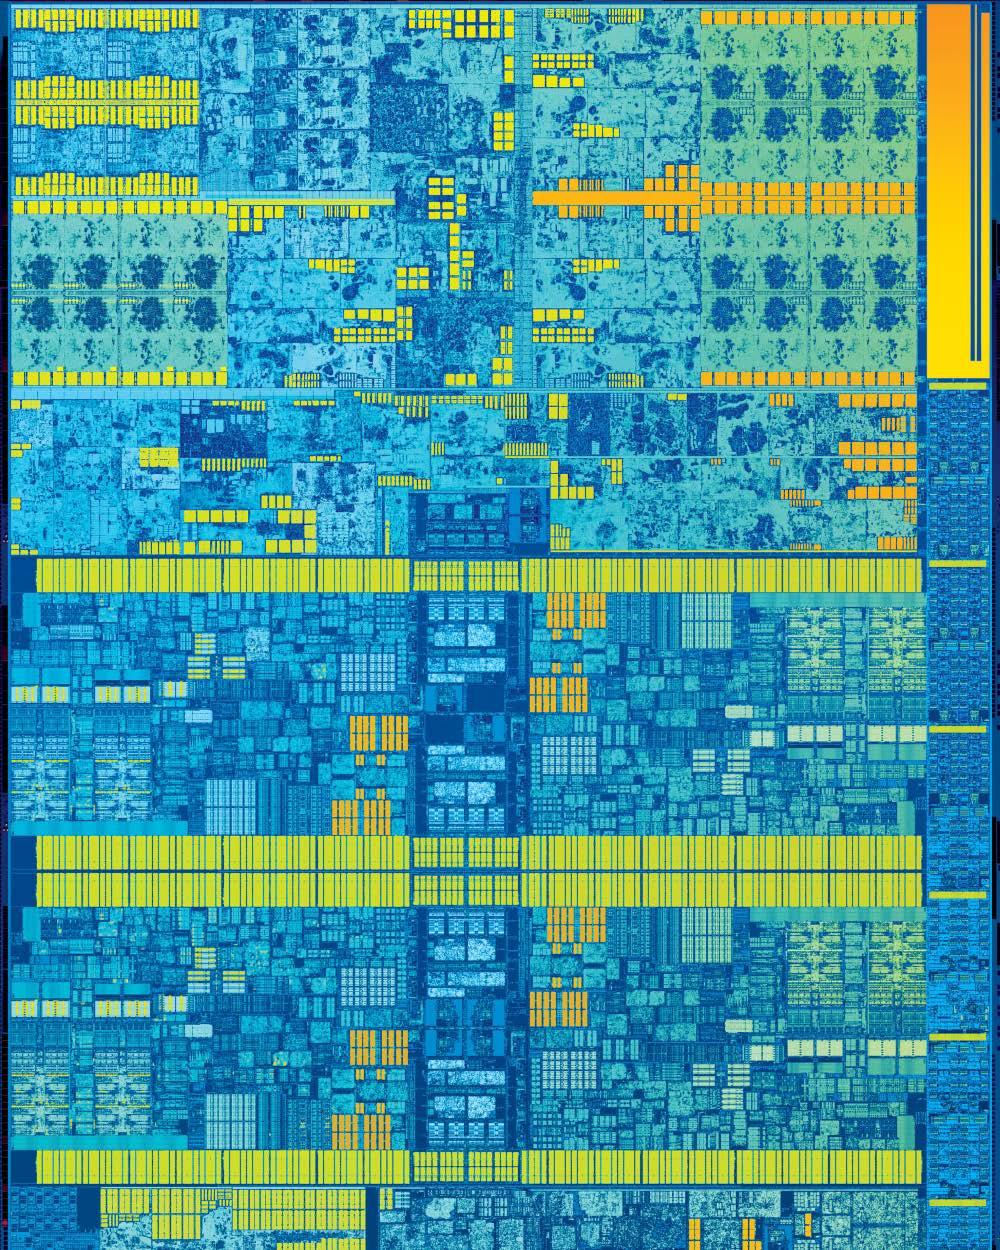 1 cm Todays Processors Intel Skylake, 2015 6th Gen Intel